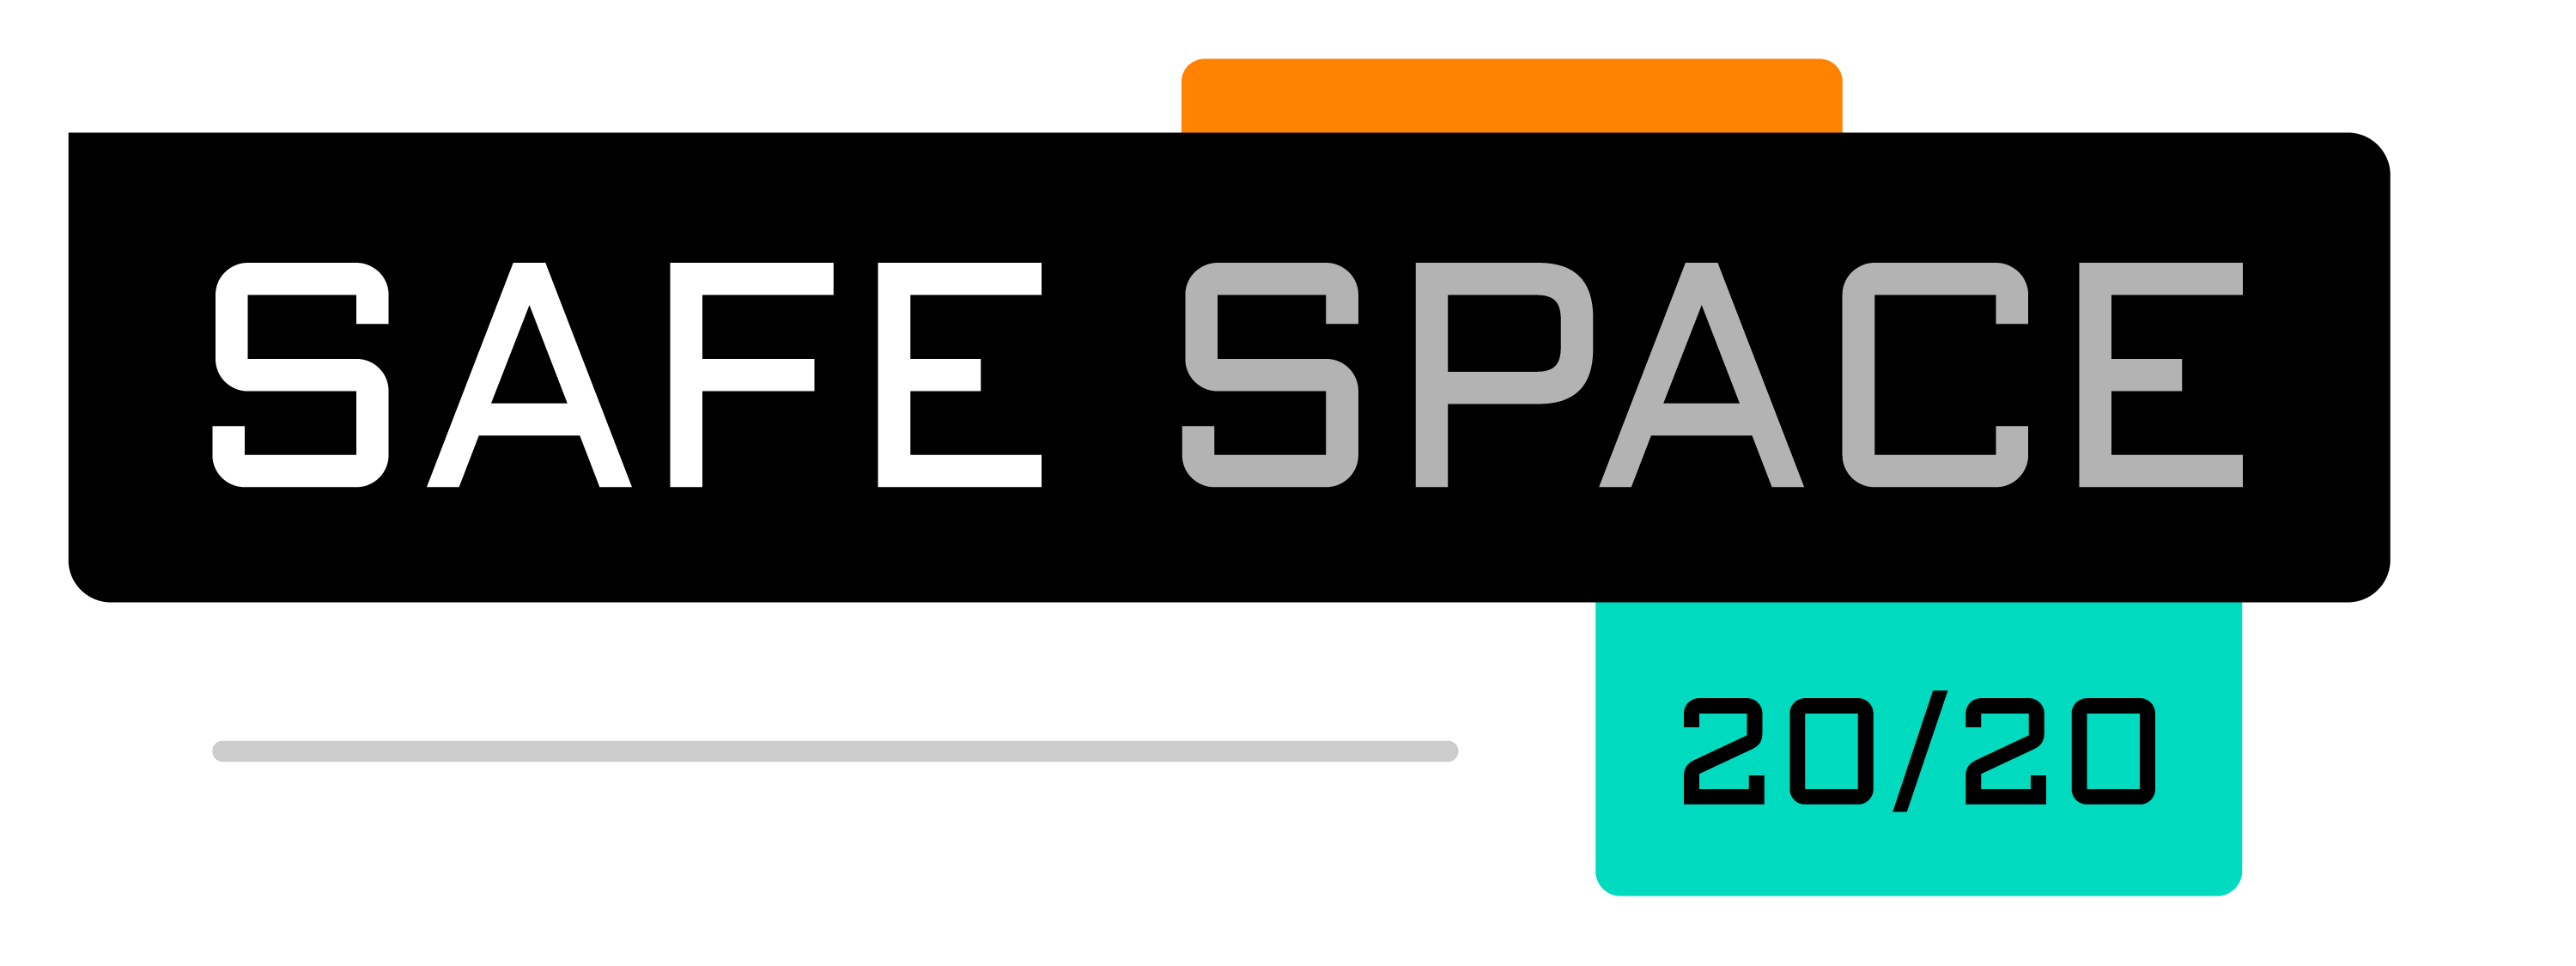 Safe Space 20/20 by Brading Fabrication Logo